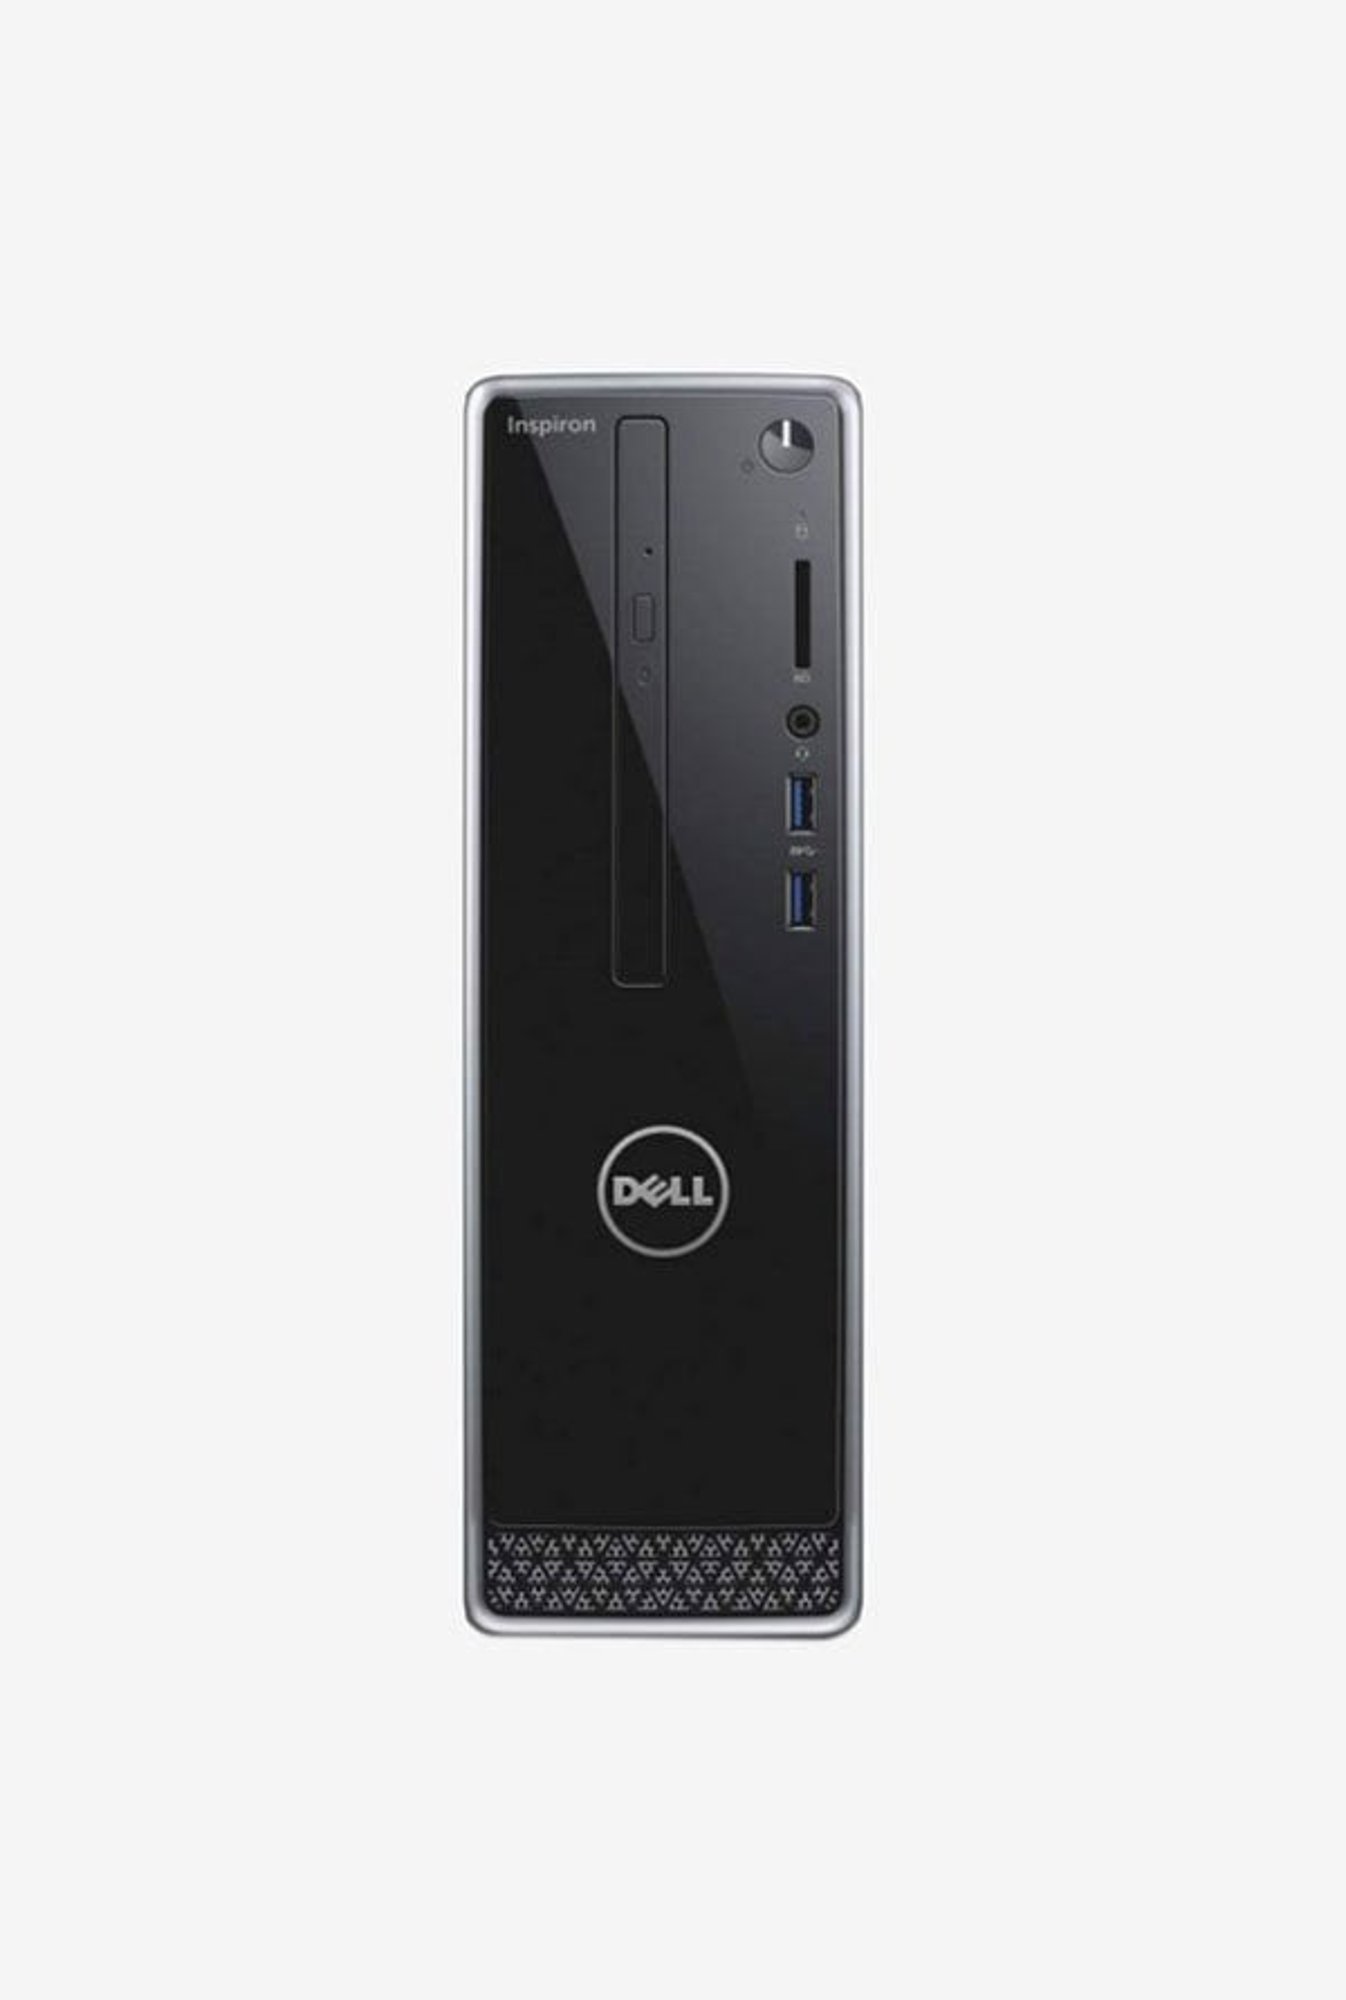 Buy Dell Inspiron 3250 Desktop (Intel Core i5, 4GB, 1TB) Black